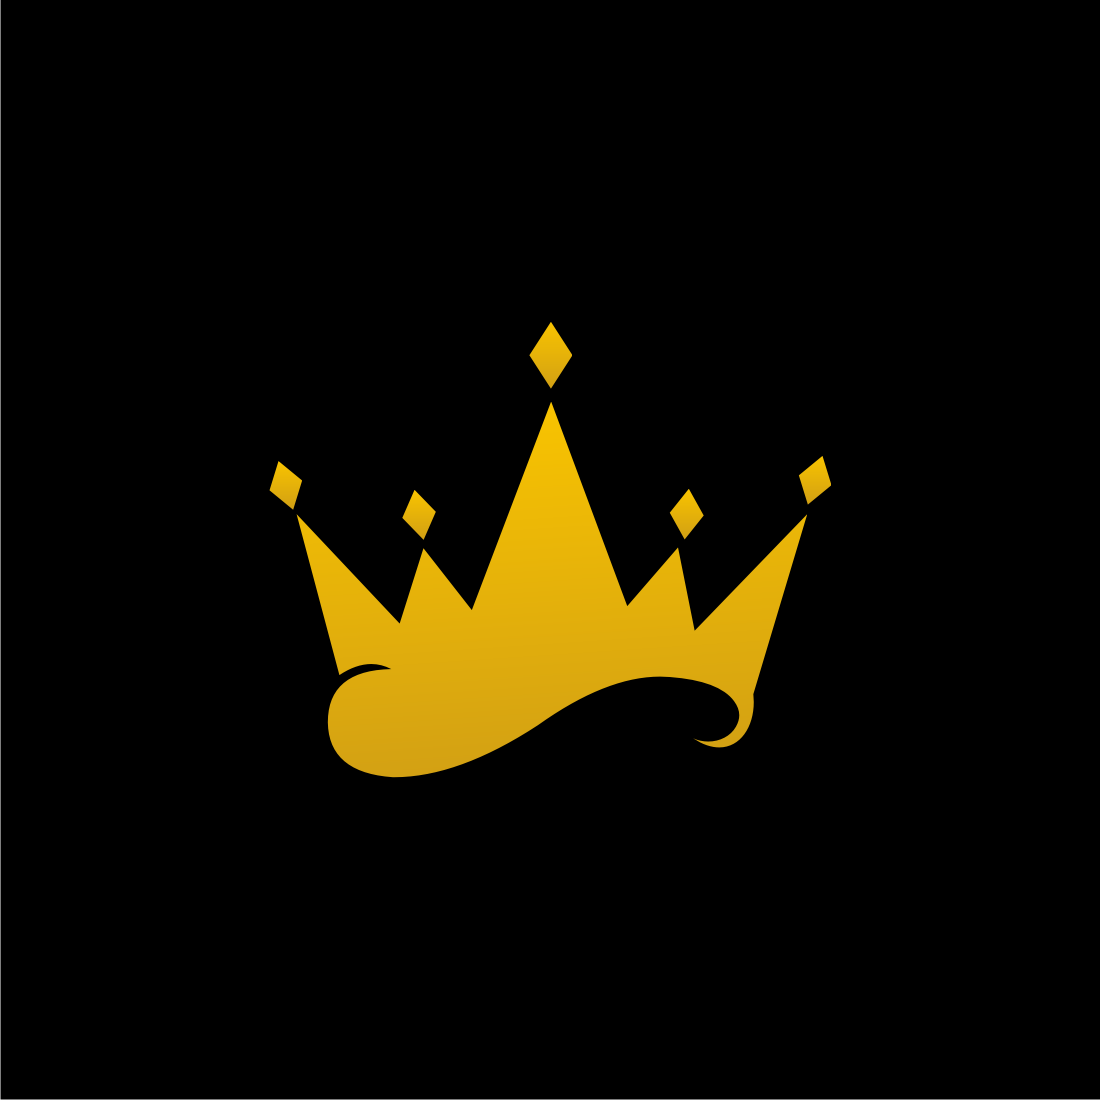 Download King's Logo in SVG Vector or PNG File Format - Logo.wine